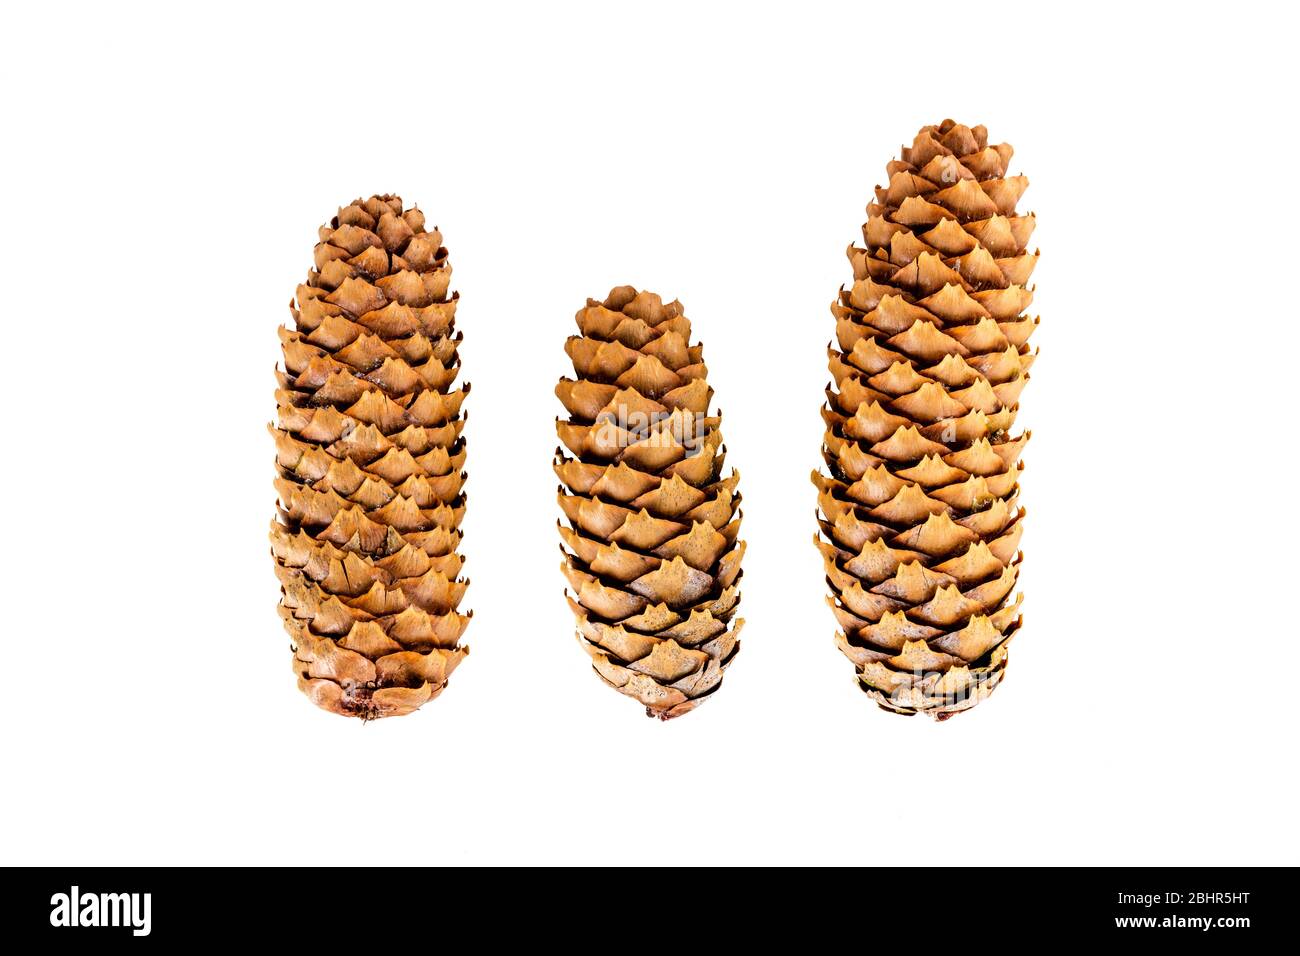 Spruce Tree Fir Cones, conifer cones, fir cones, Picea abies, Norway spruce cones, spruce cones, spruce fir cones, tree cones, cutout, copy space, Stock Photo